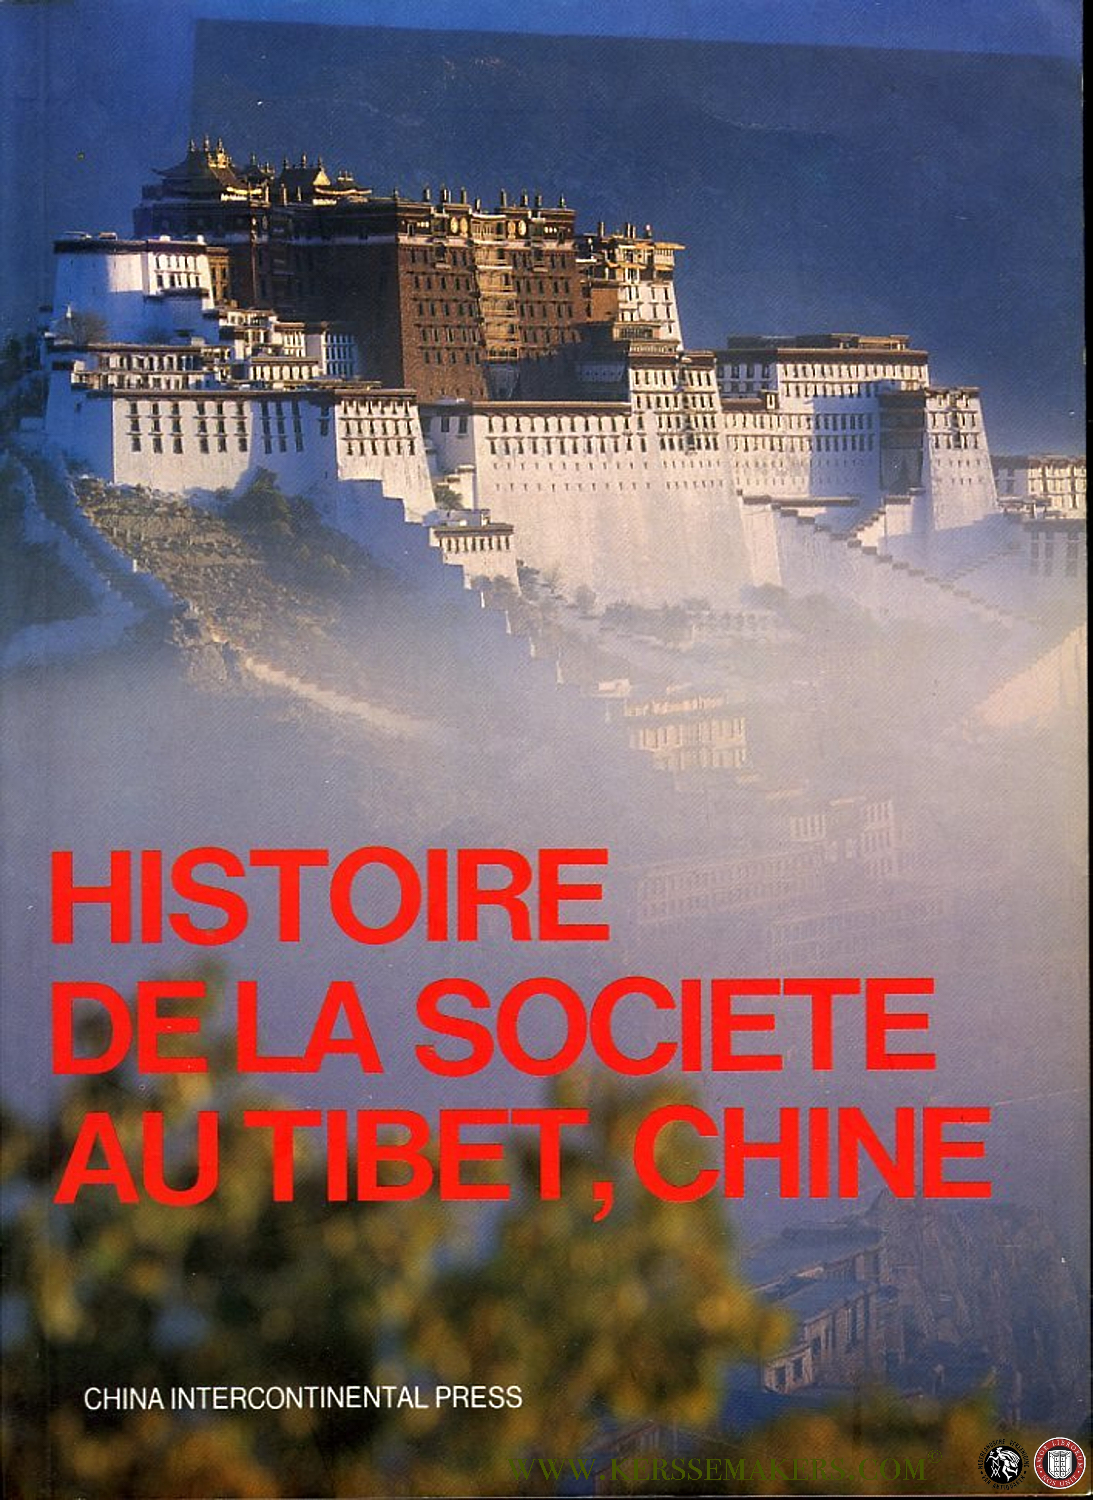 Histoire de la societe au Tibet, Chine - Jin Hui (editor)